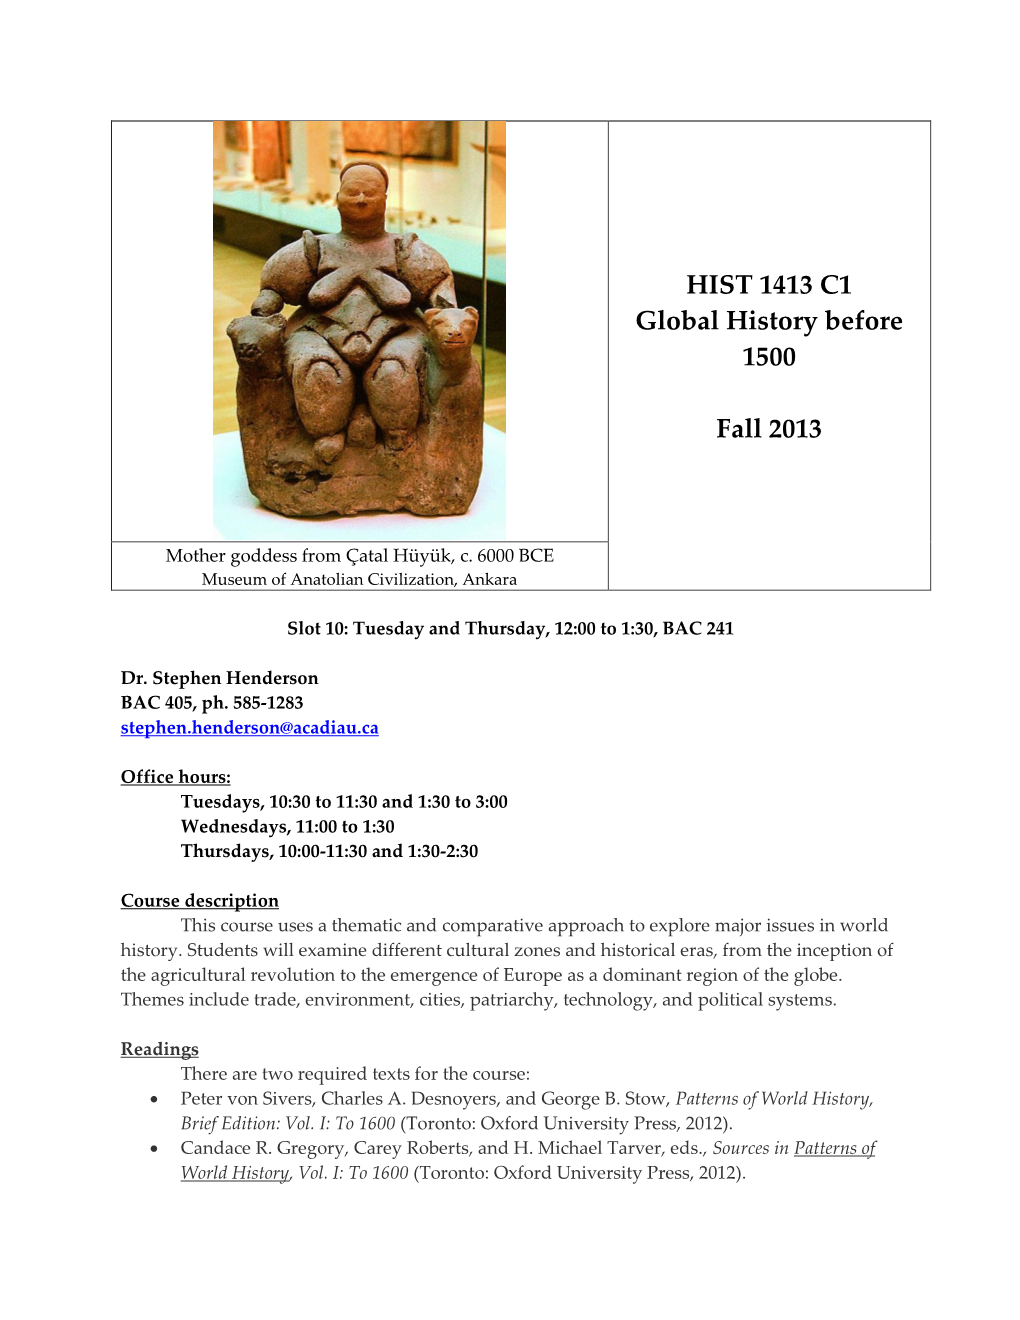 HIST 1413 C1 Global History Before 1500 Fall 2013